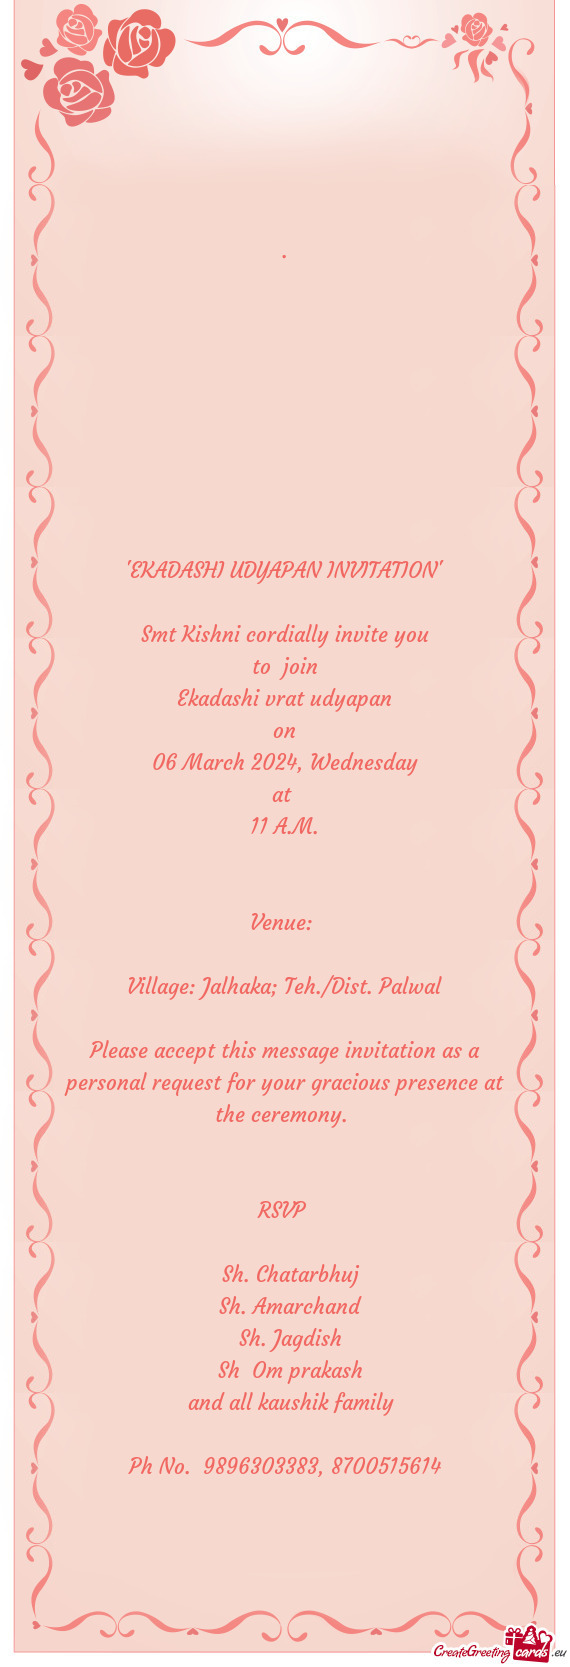 Smt Kishni cordially invite you